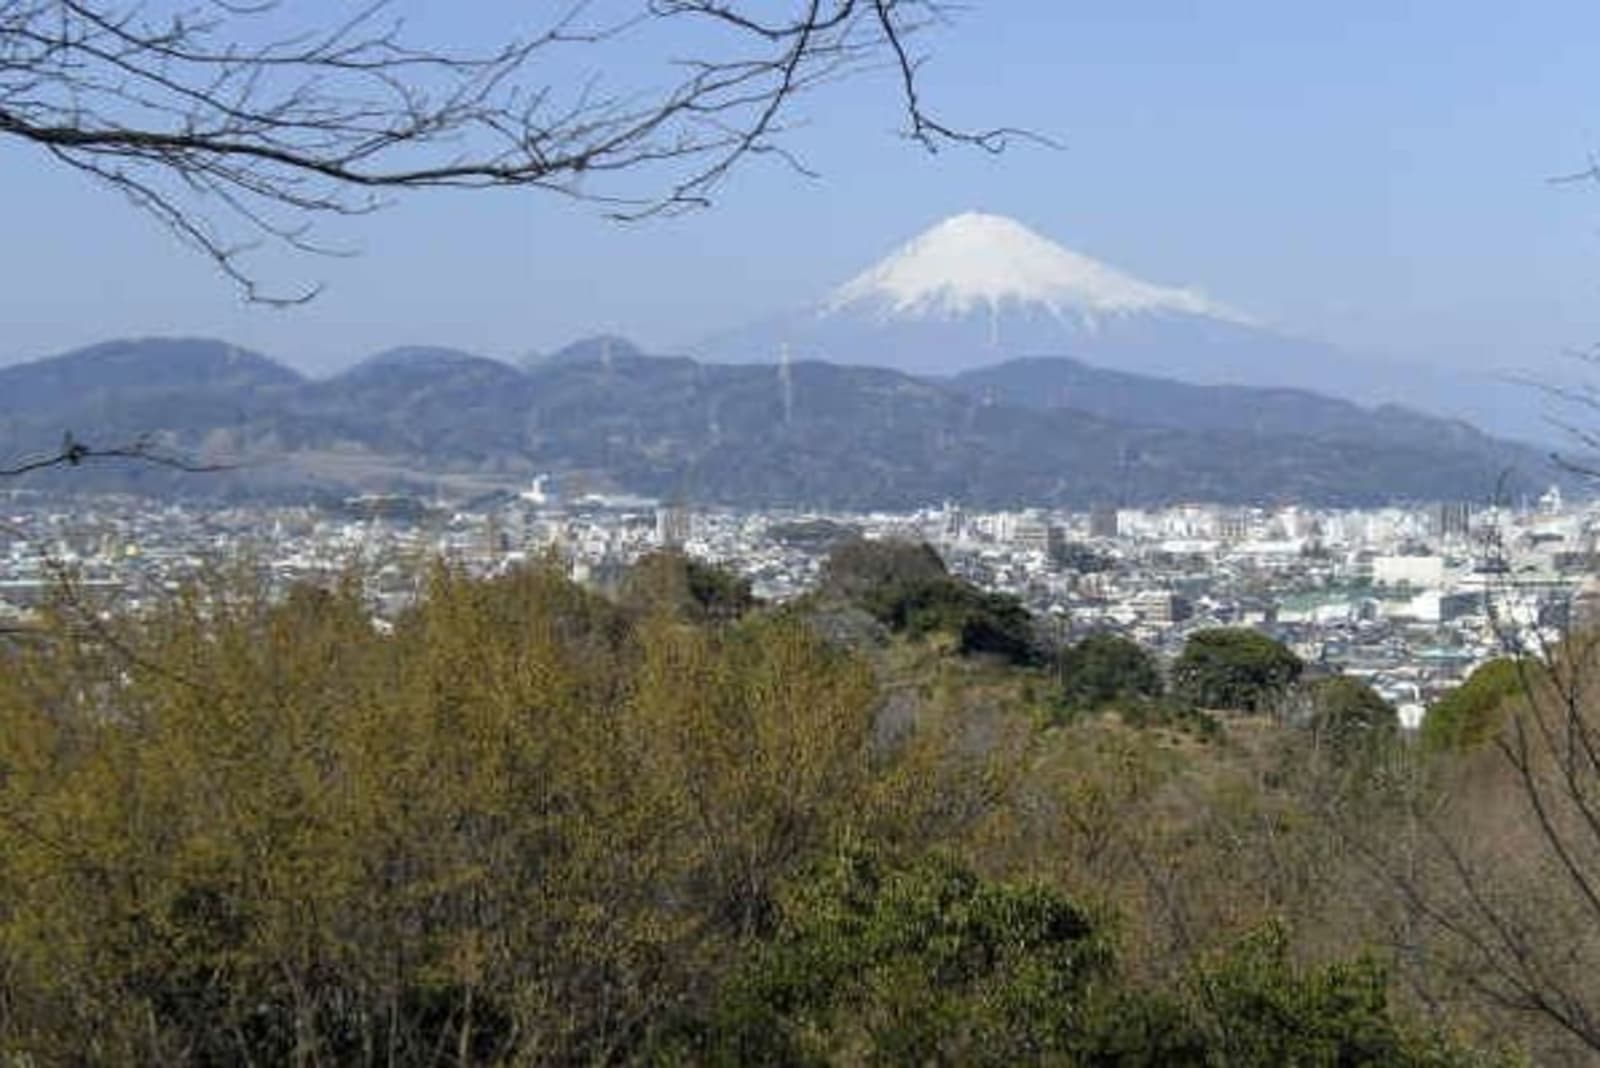  The view of Mt Fuji from Shizuoka